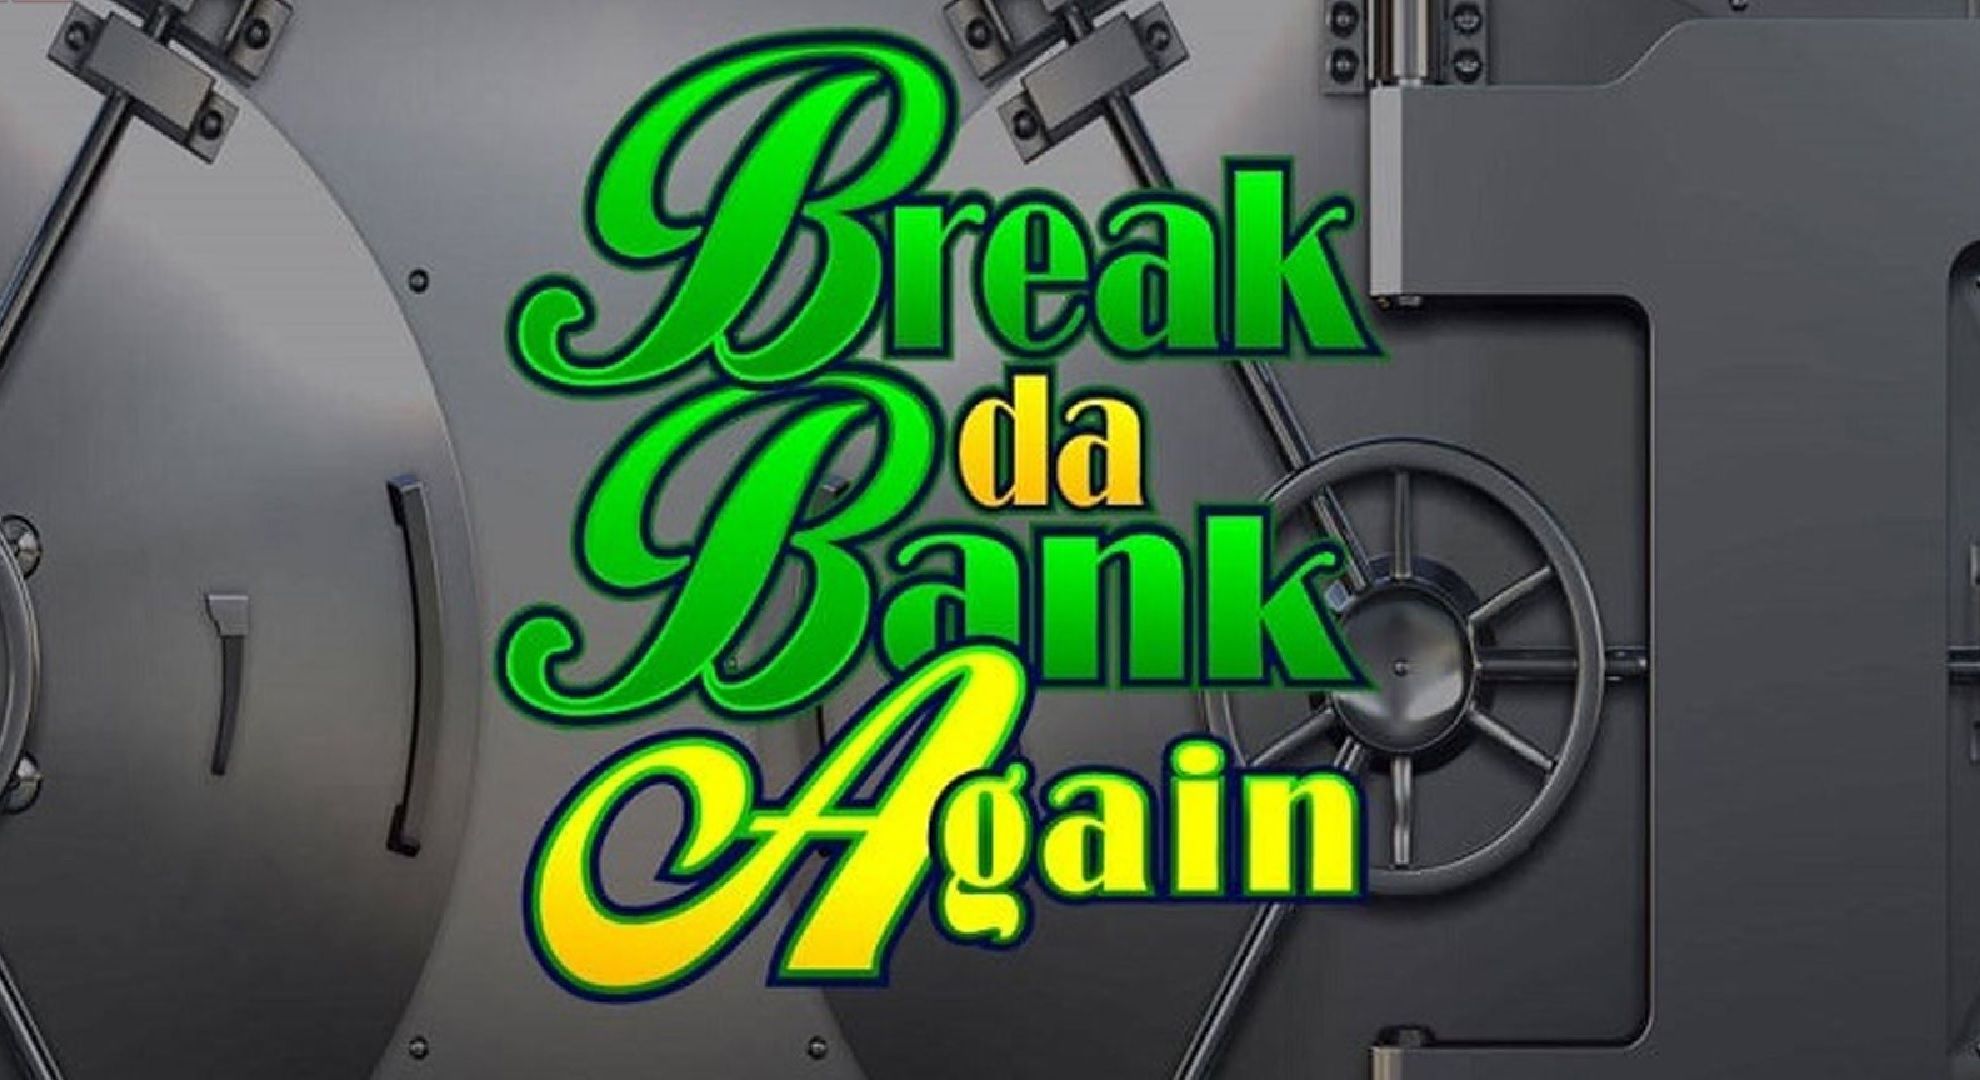 slot gratis break da bank again